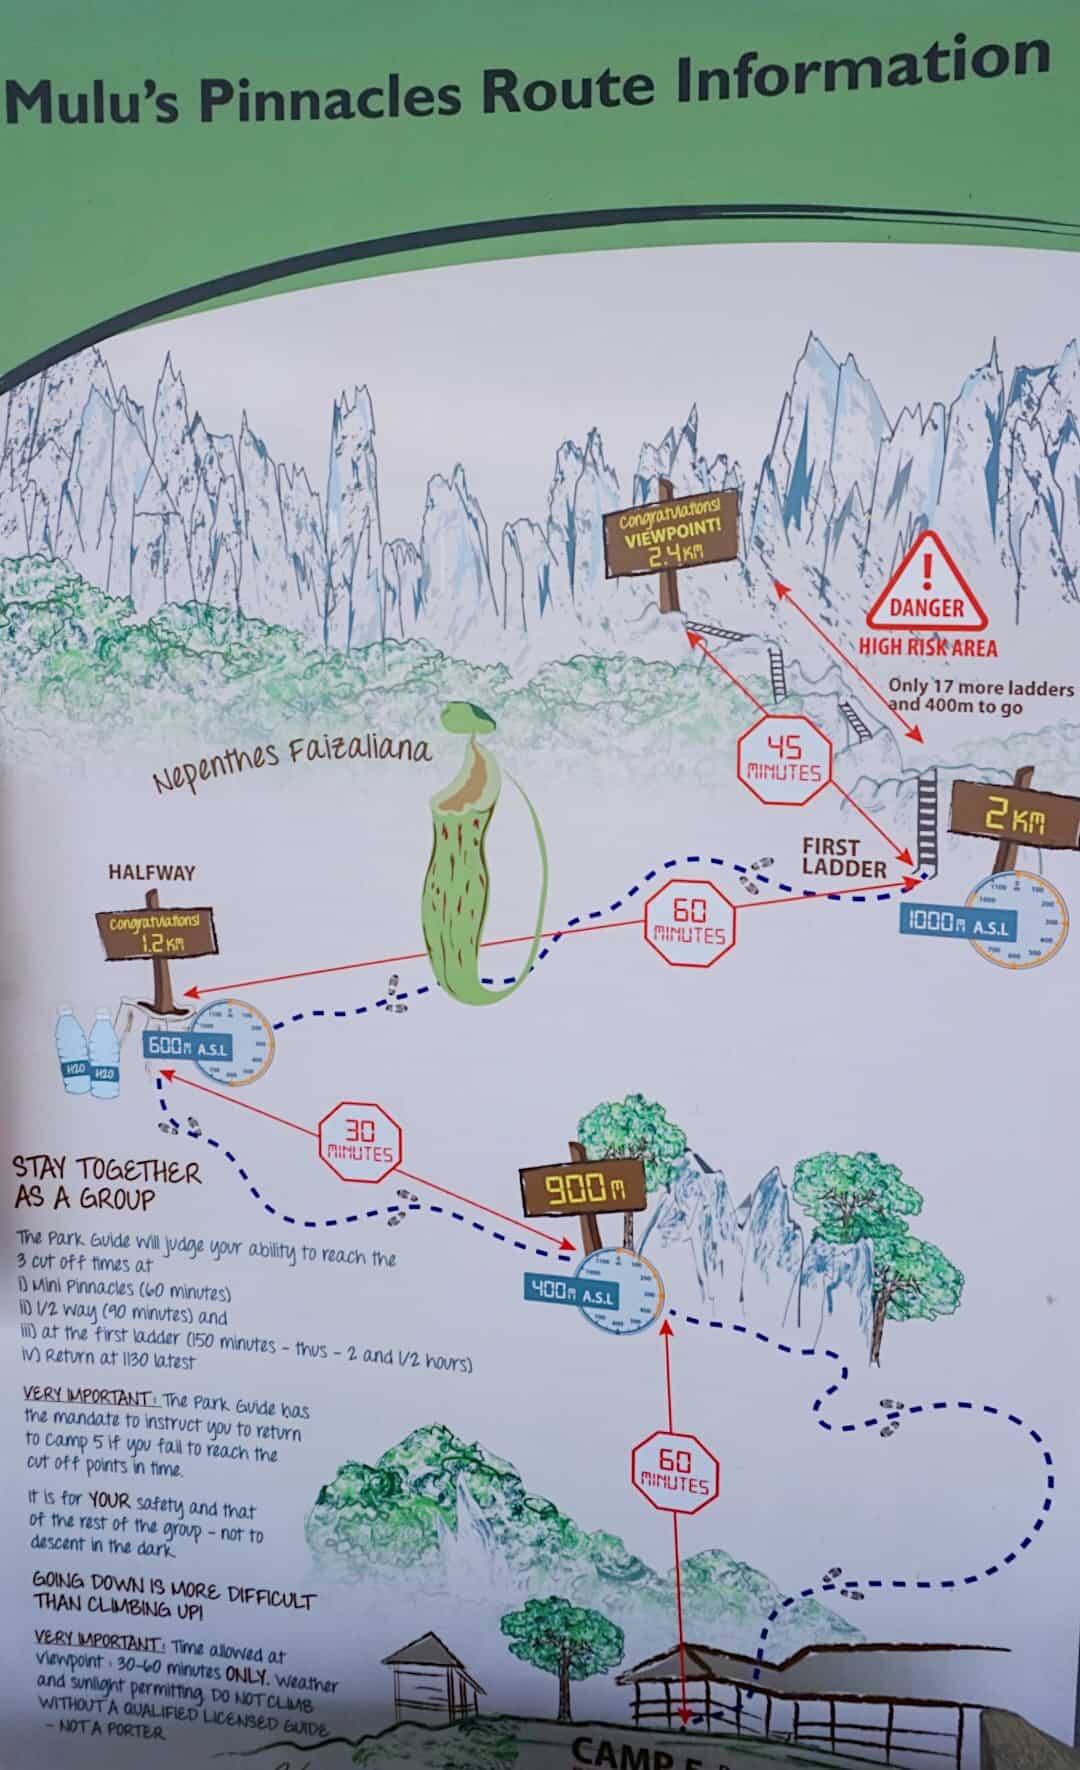 Mulu Pinnacles route information